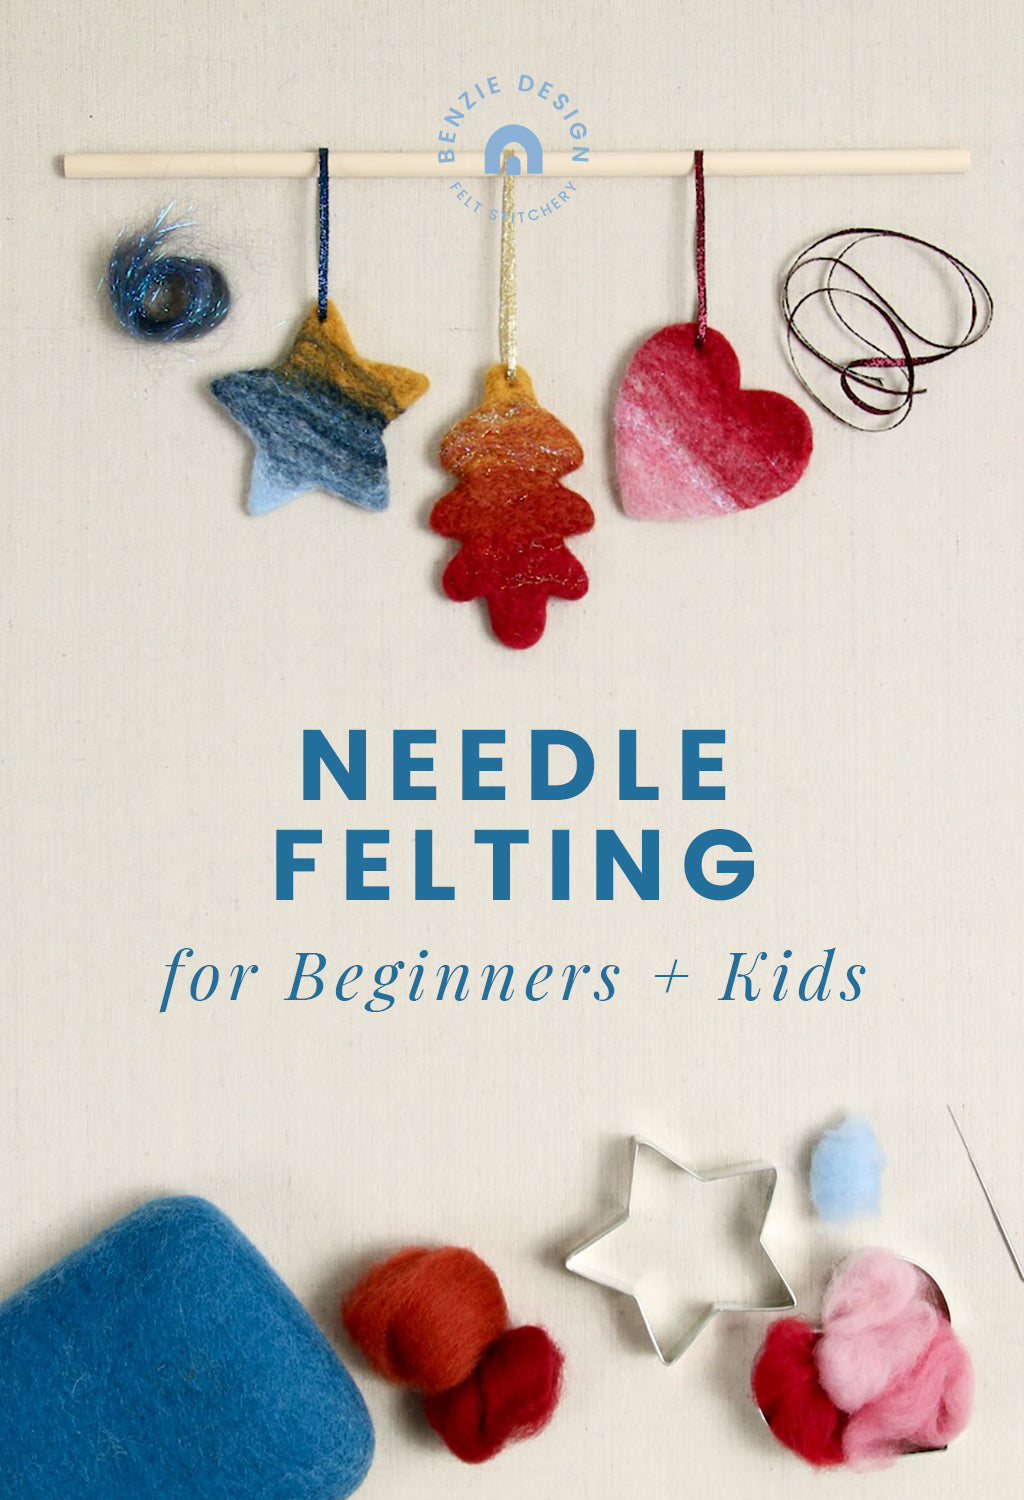 How to Needle Felt: Easy Tutorial For Beginners